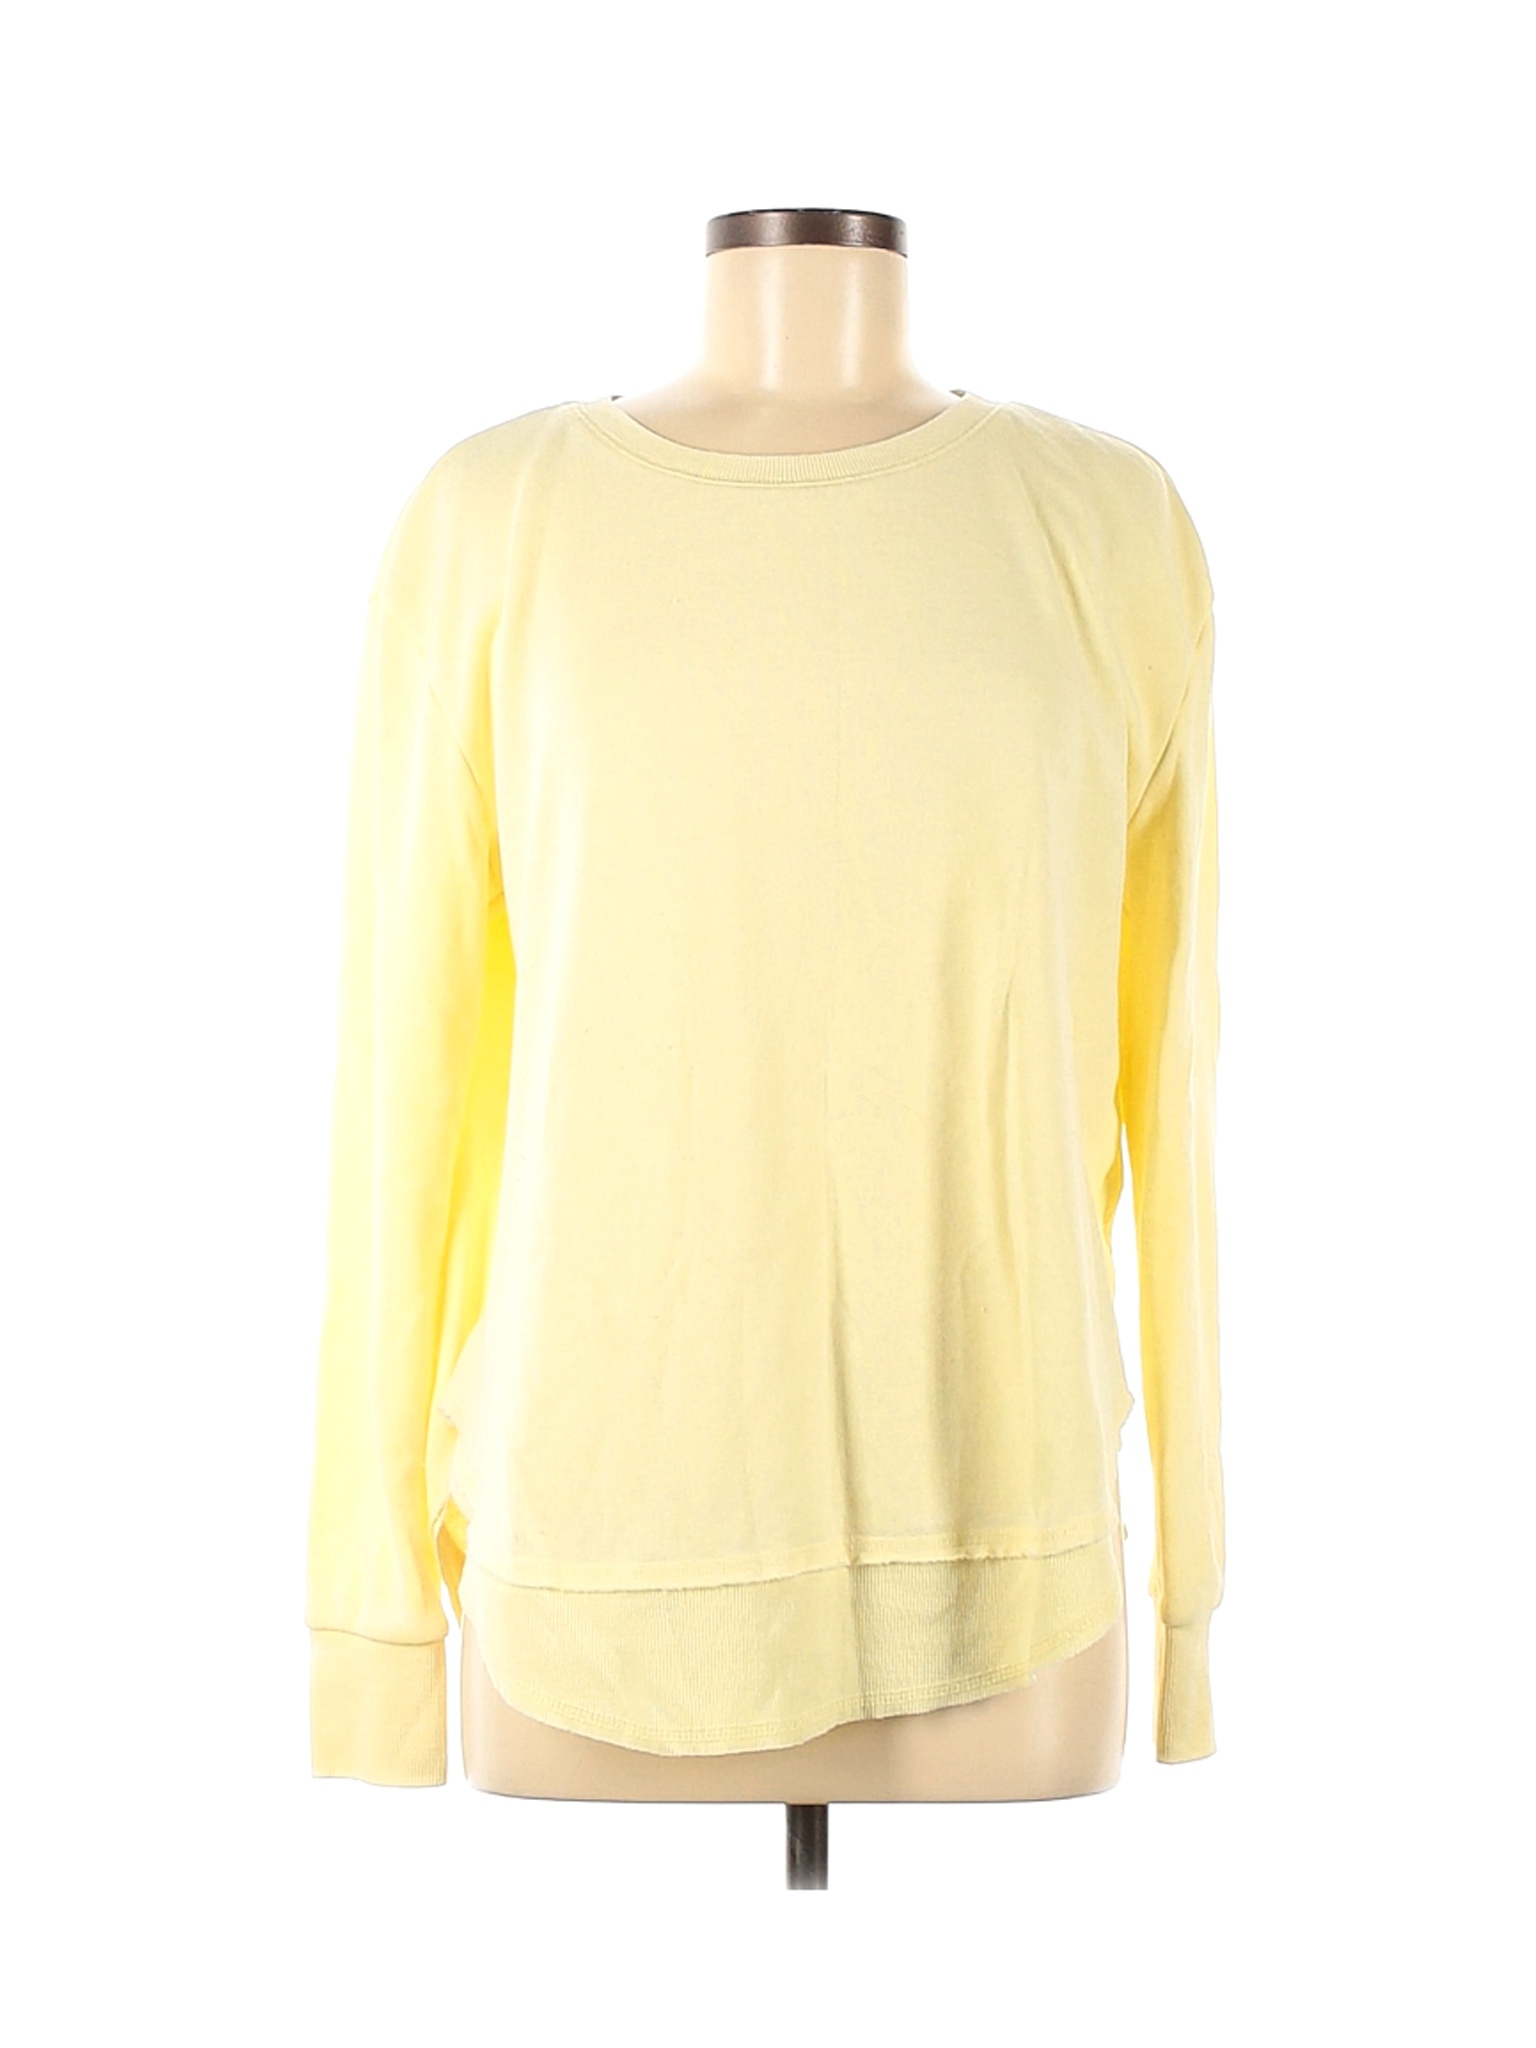 Ocean Drive Clothing Co. Women Yellow Sweatshirt M | eBay